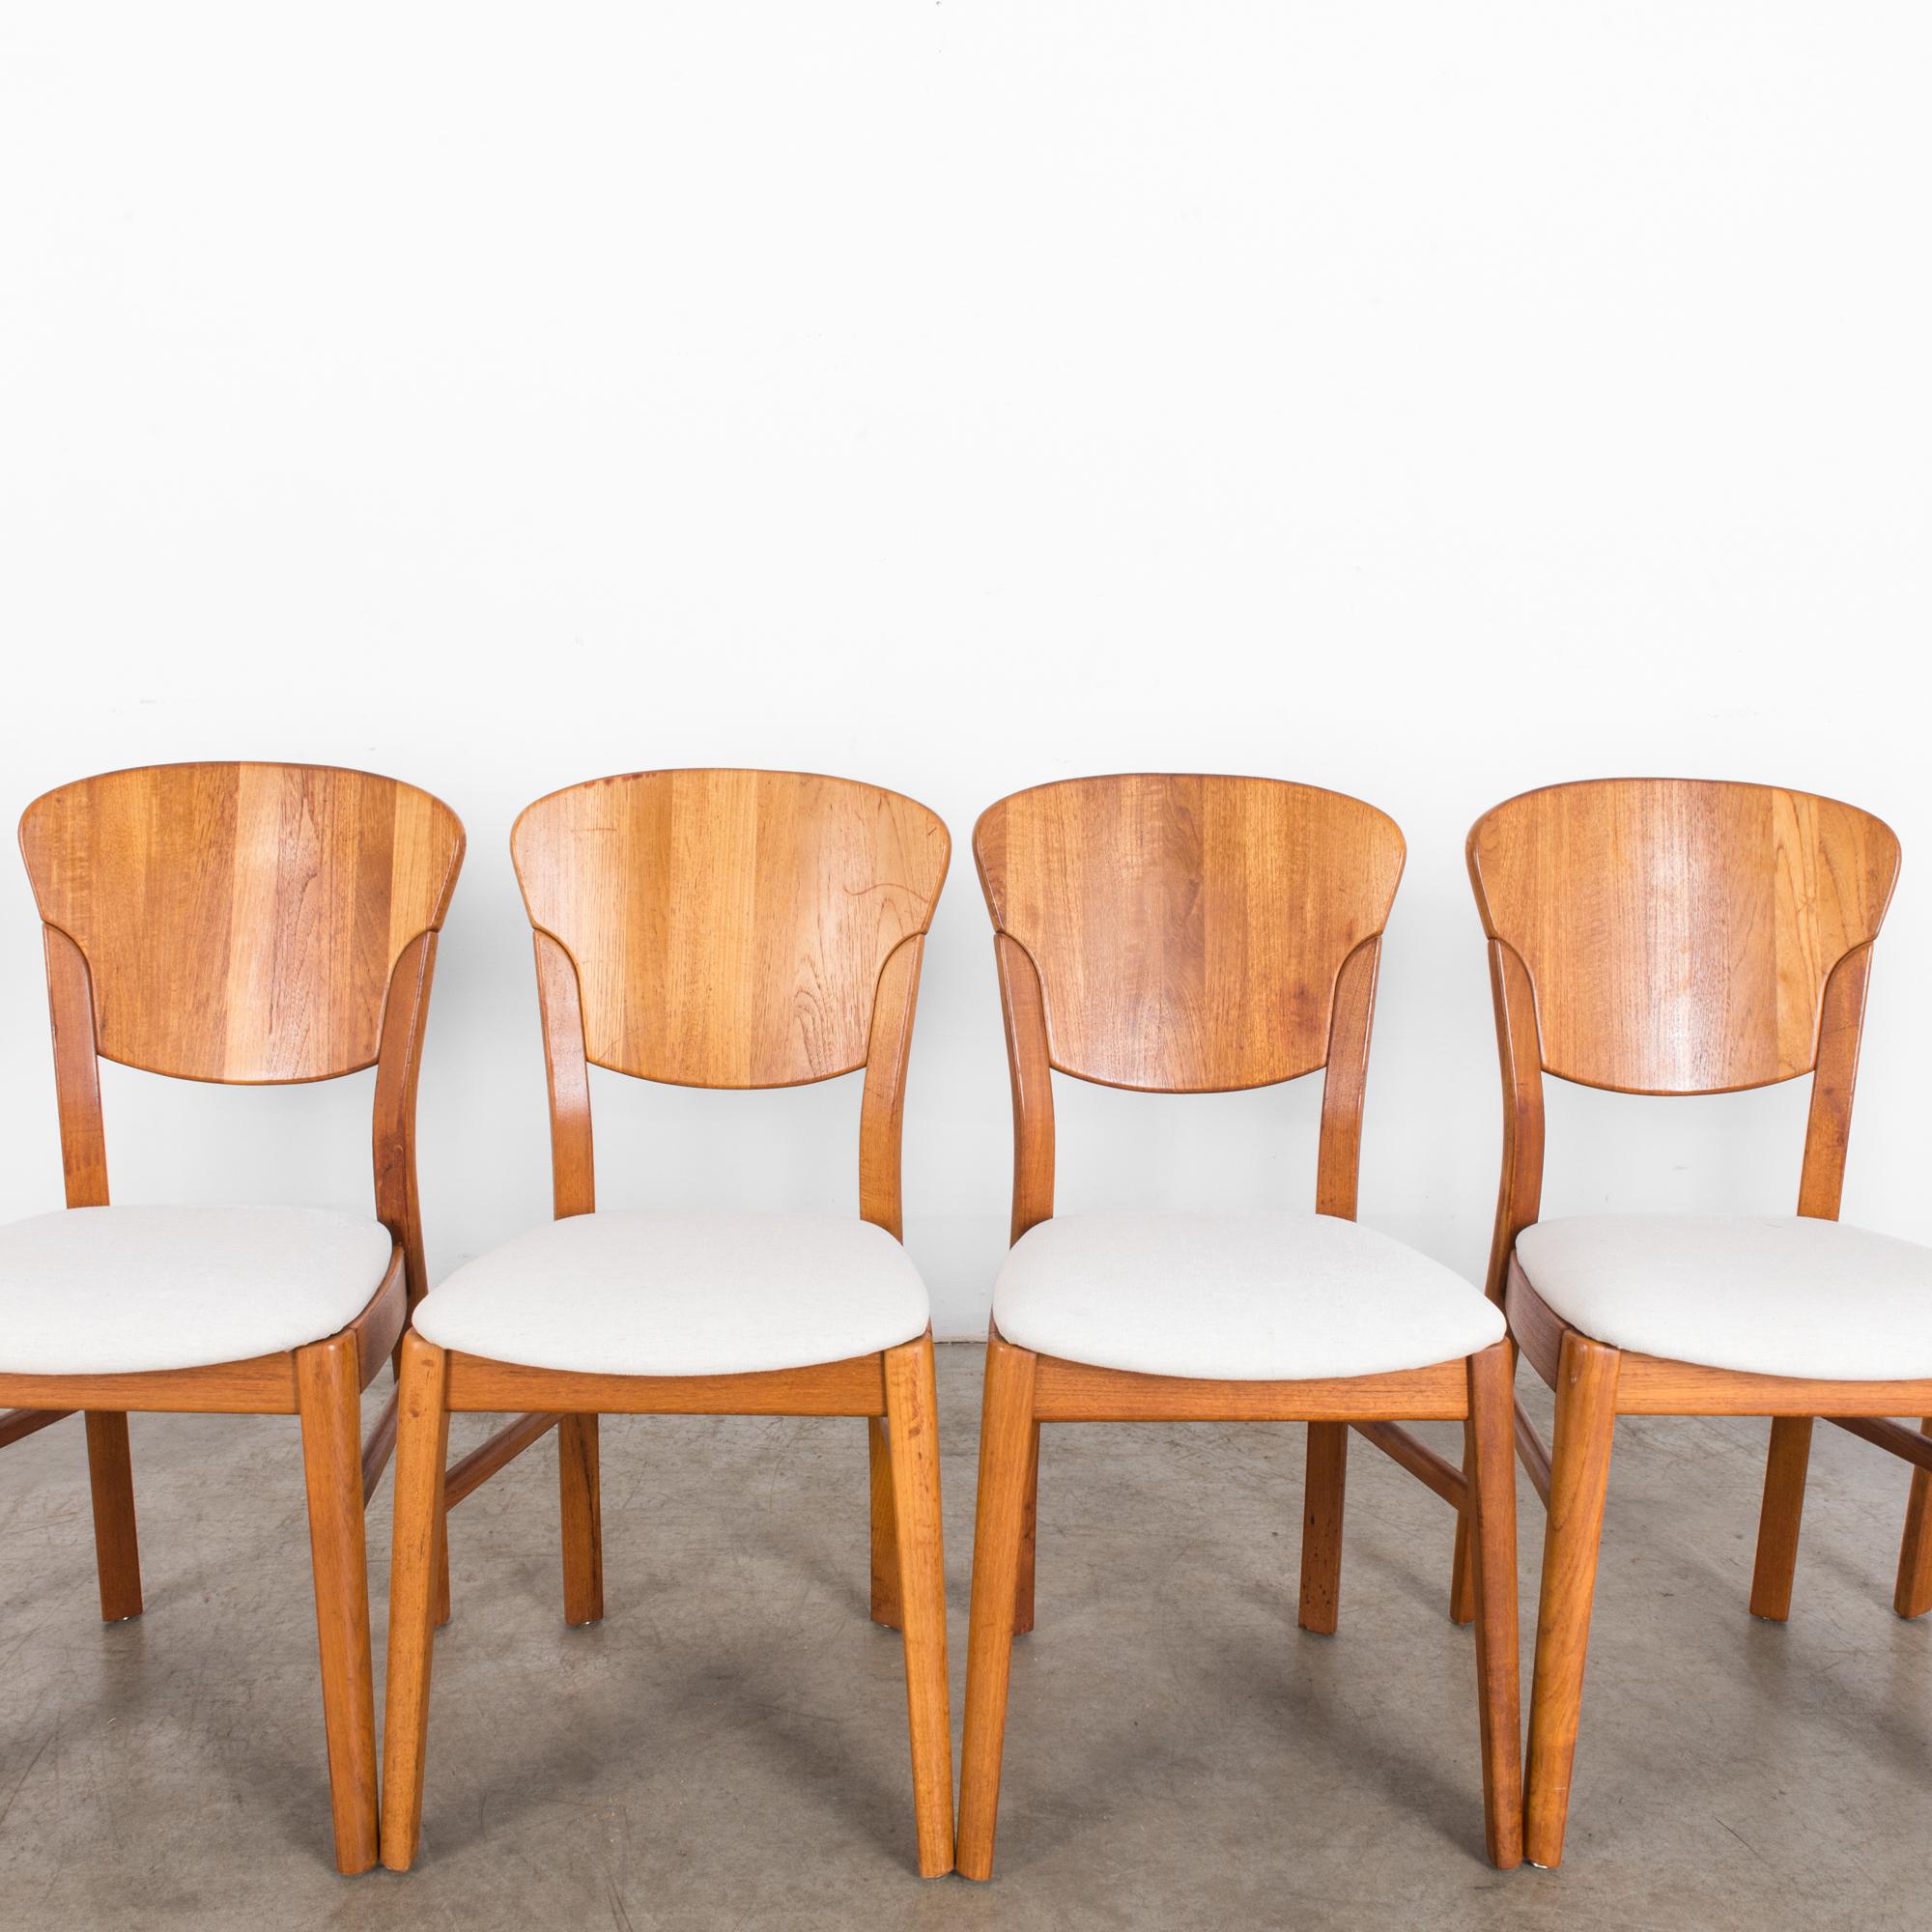 Mid-20th Century Danish Modern Dining Chairs by Glostrup Møbelfabrik, Set of Six